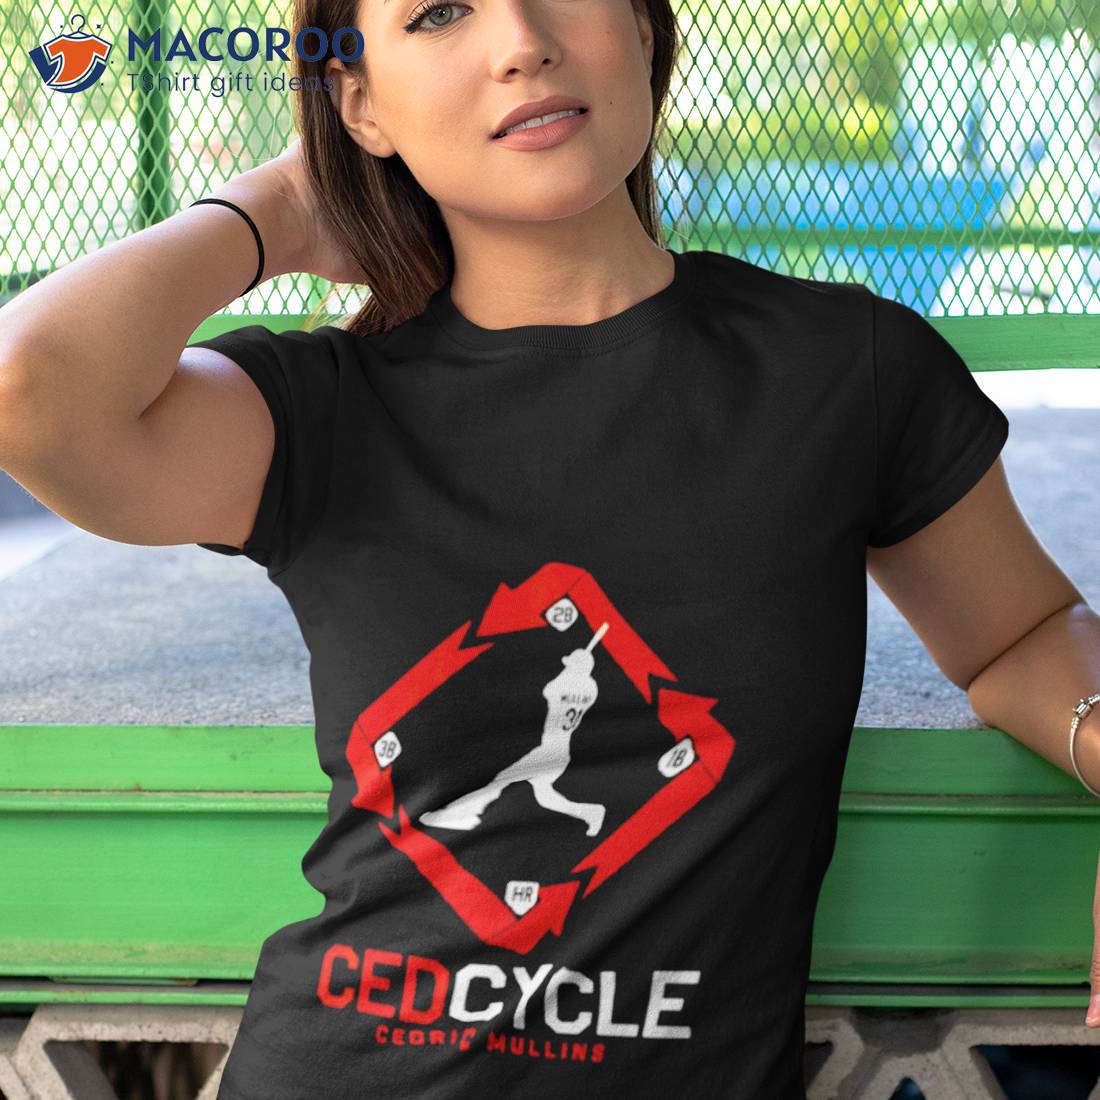 Cedric Mullins Cycle T-shirt